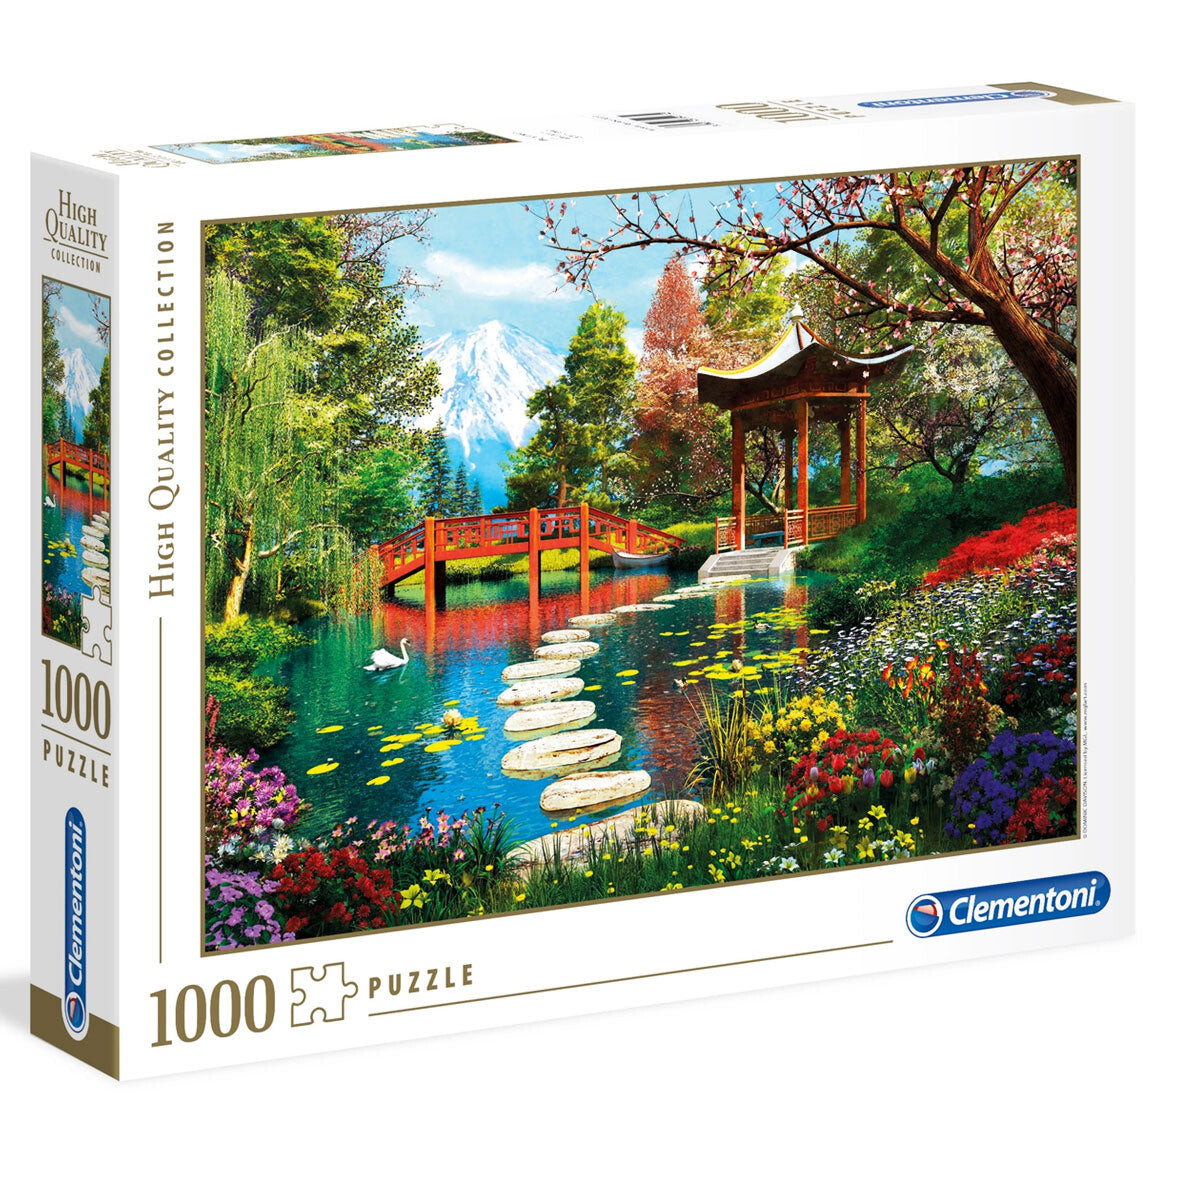 Puzzle Rompecabezas Clementoni 1000 Pzs Calidad HD - Jardin Fuji 